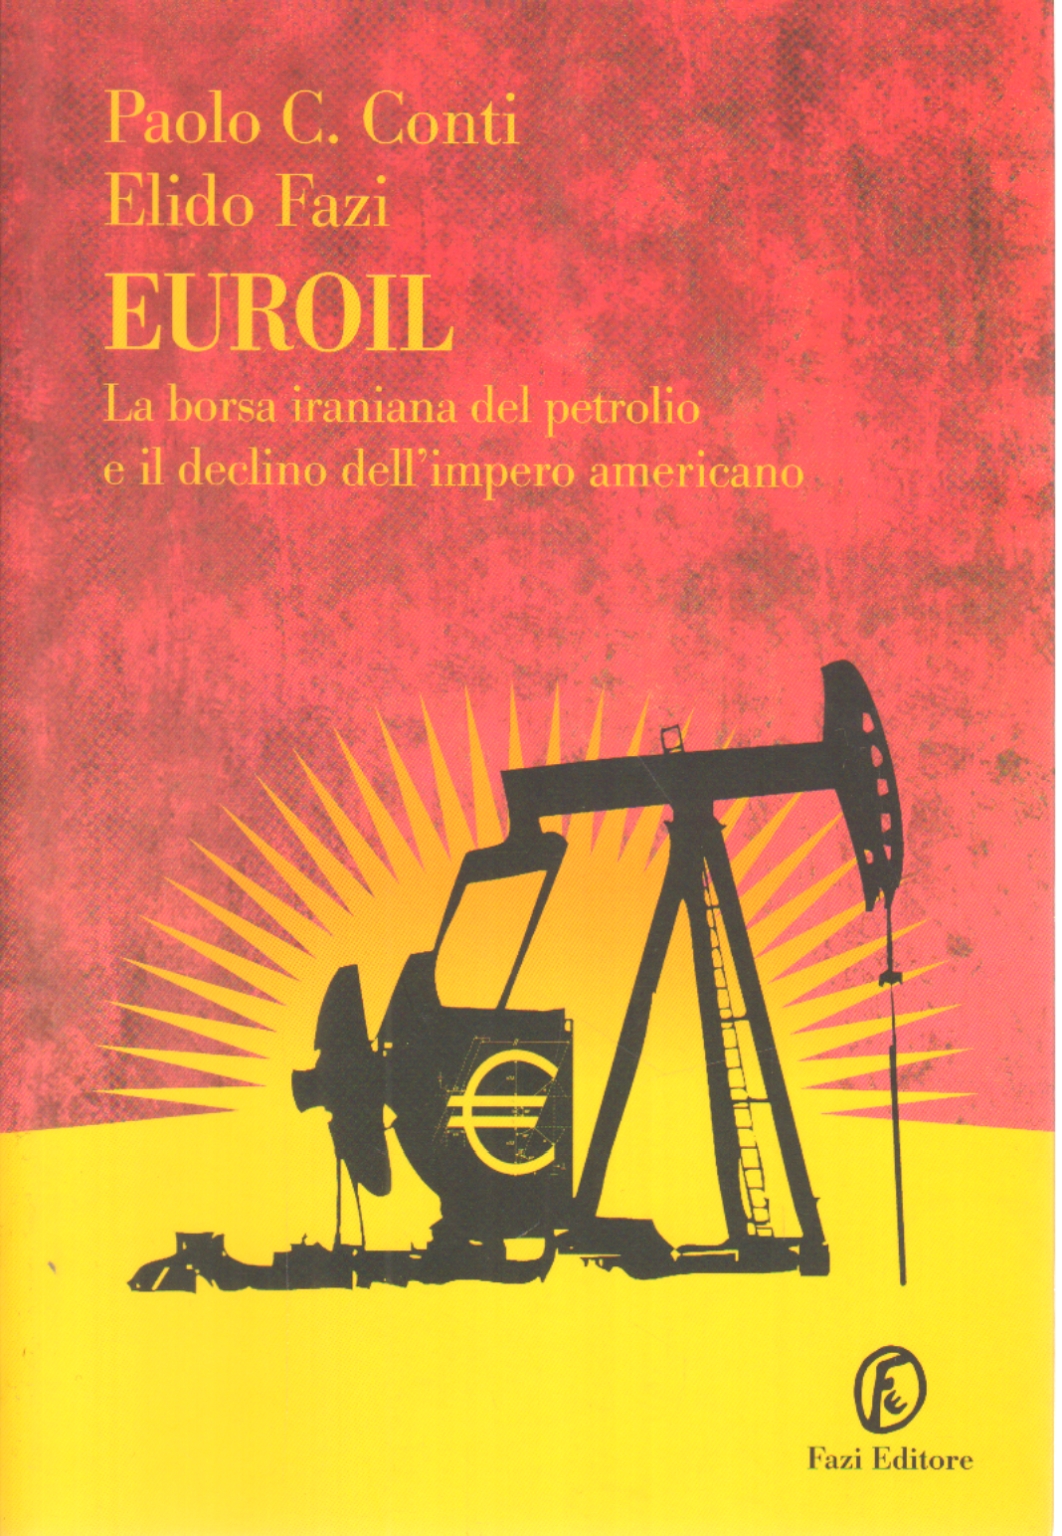 Euroil, Paolo C. Conti Elido Fazi